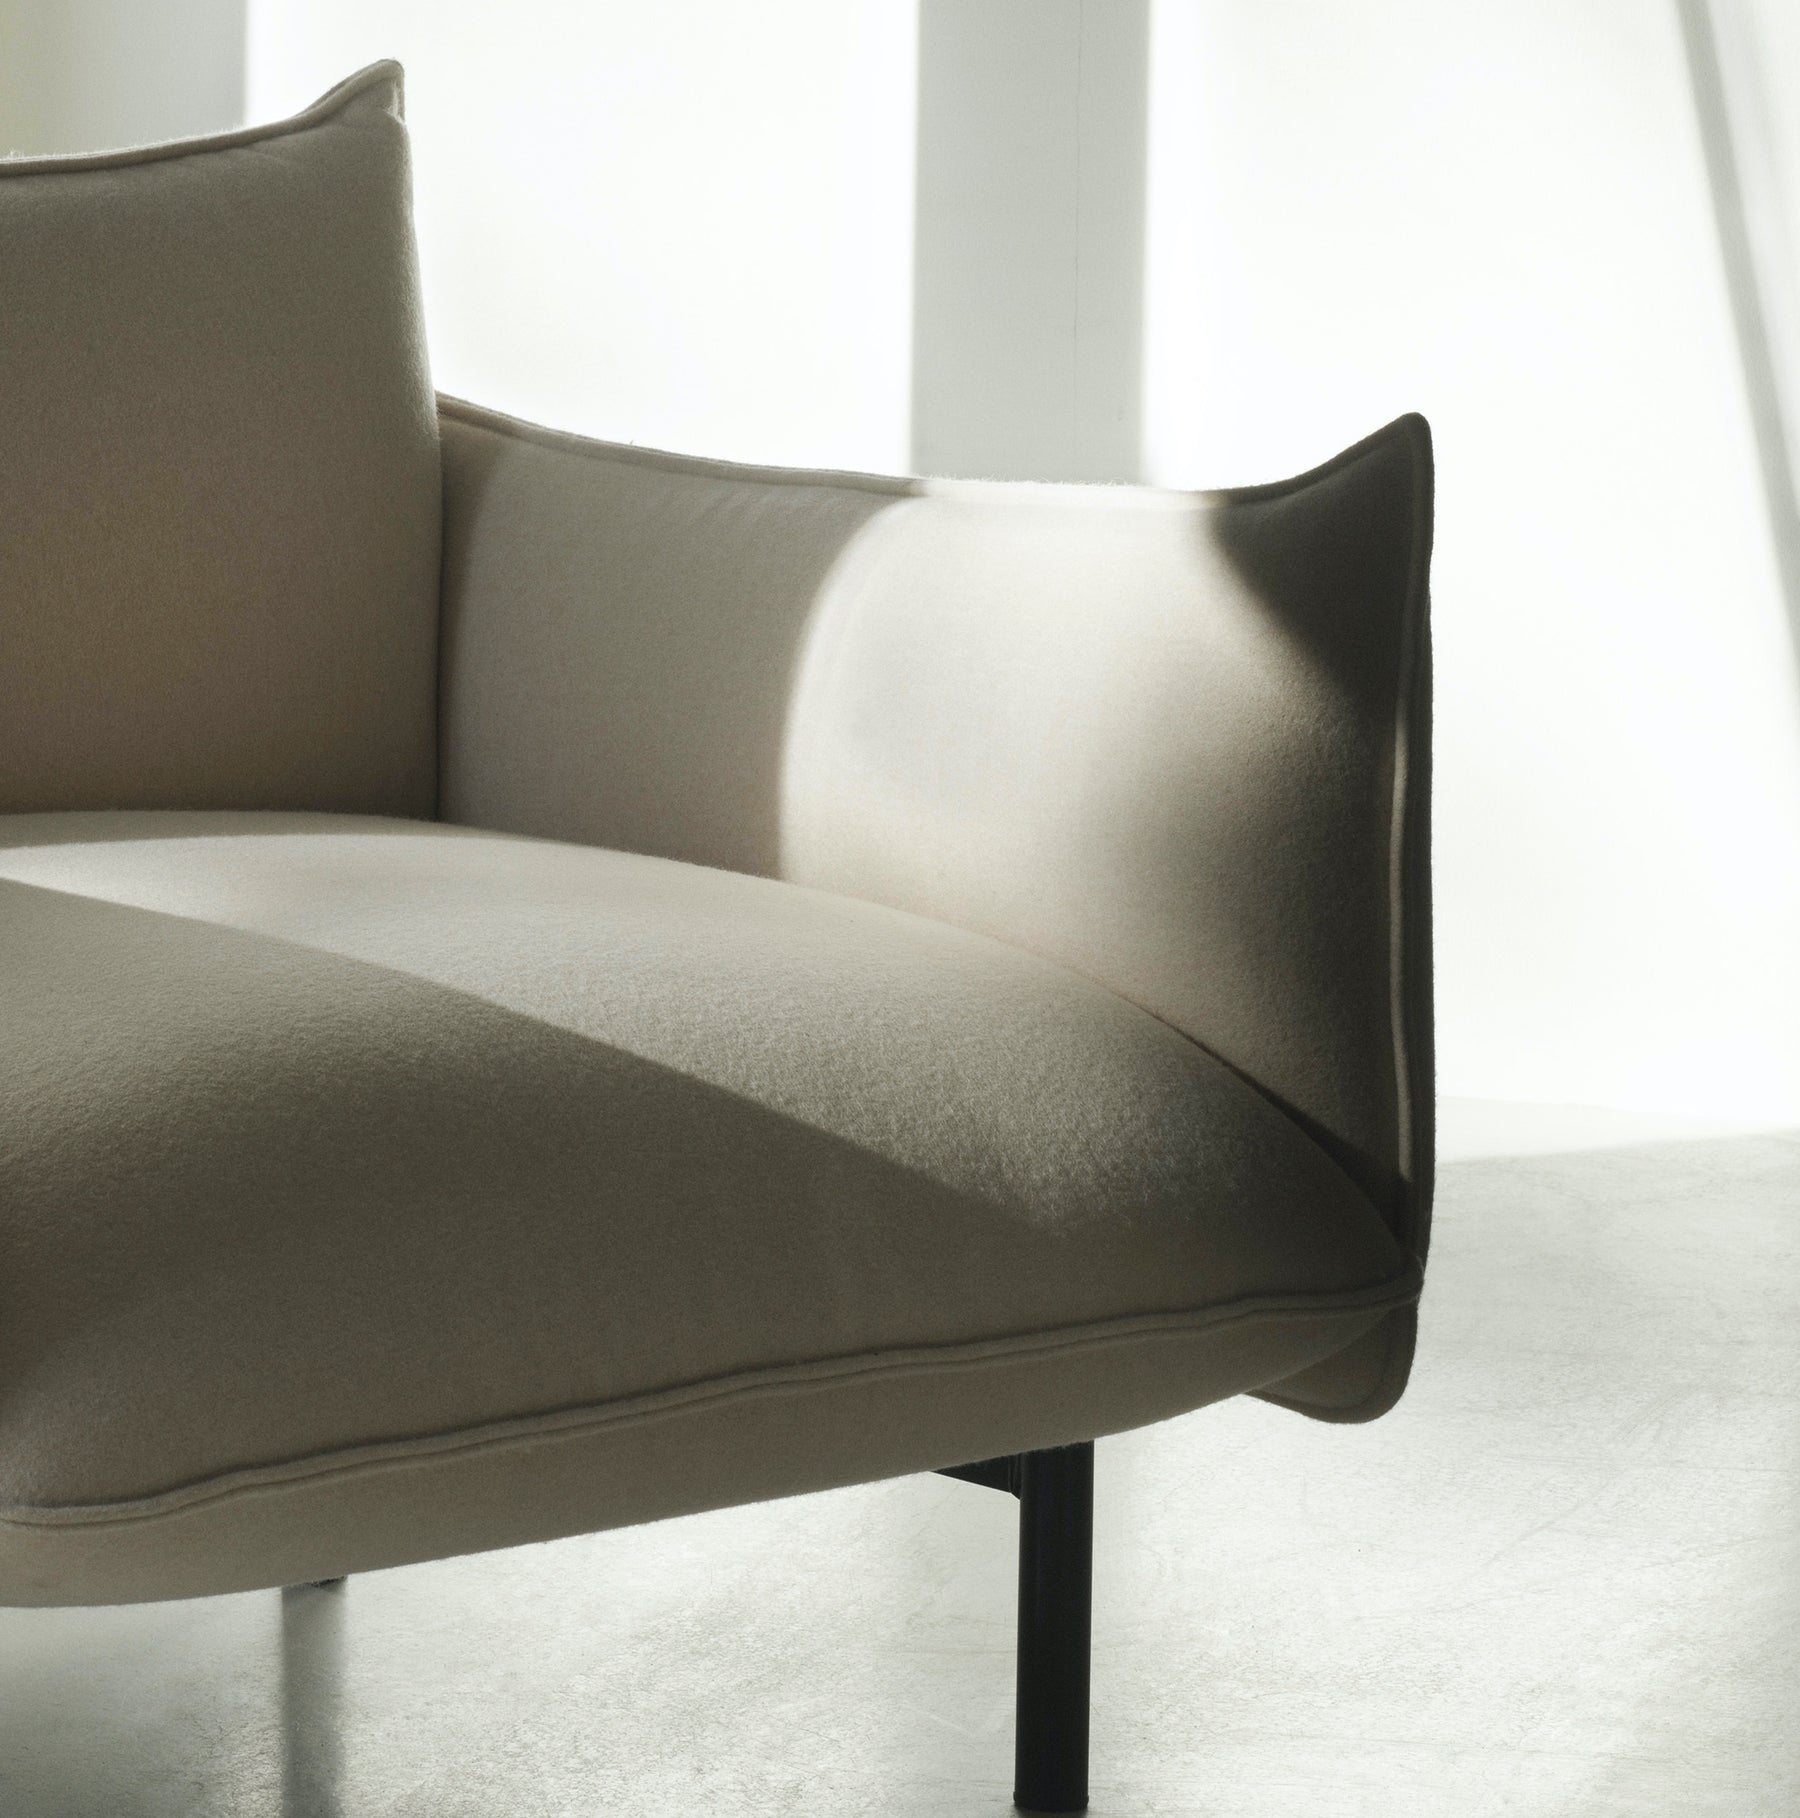 Normann Copenhagen Ark 4 Seater Corner Modular Sofa at someday designs. #colour_divina-md-203